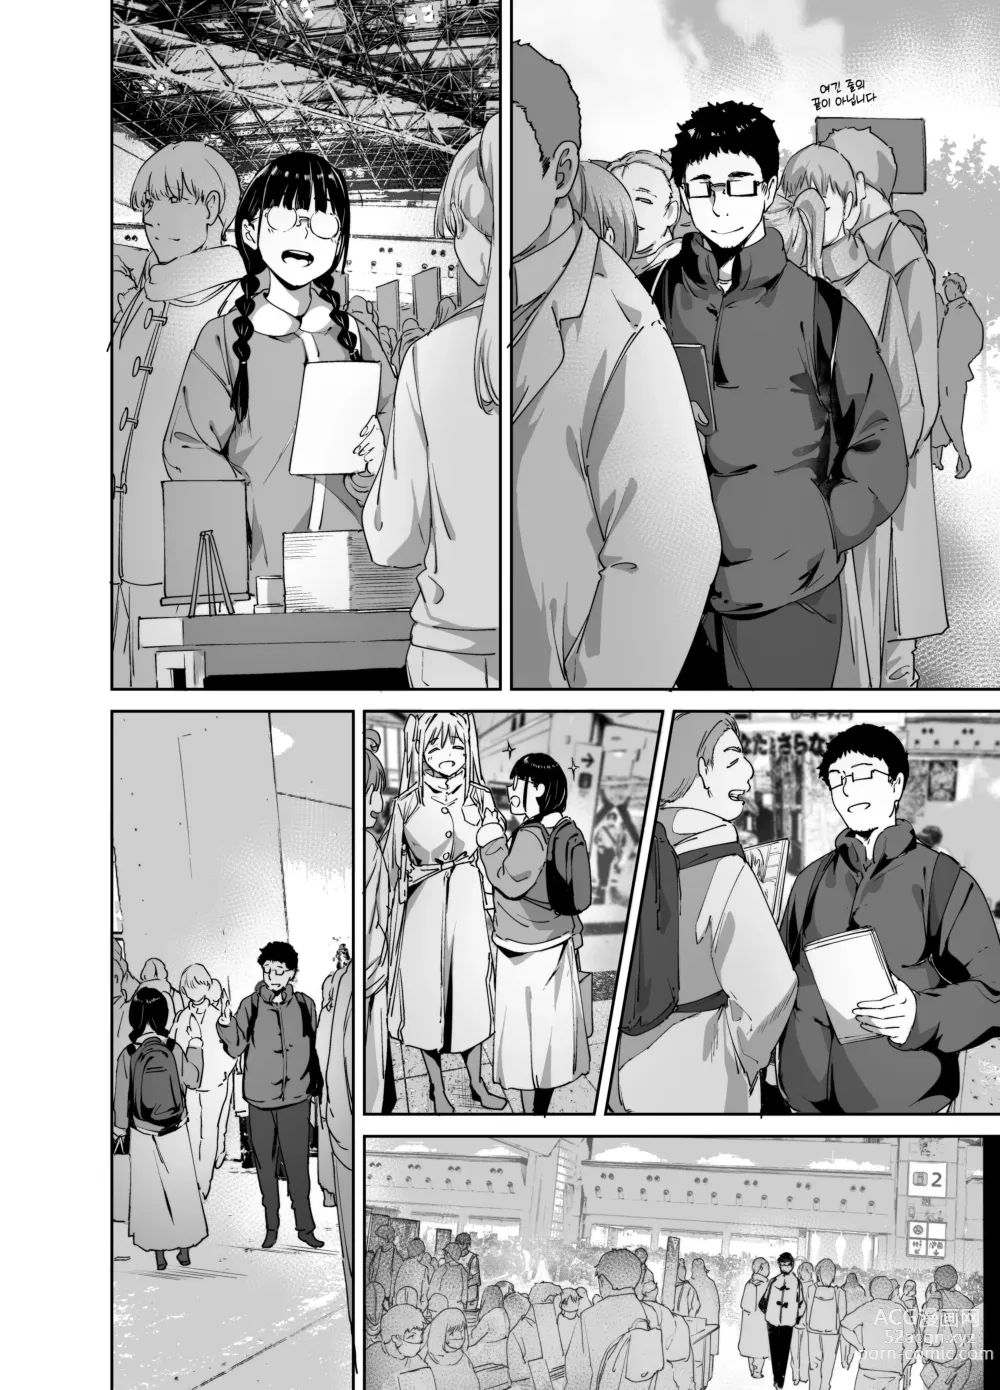 Page 4 of doujinshi 오타쿠 친구랑 하는 섹스는 최고로 기분 좋다2